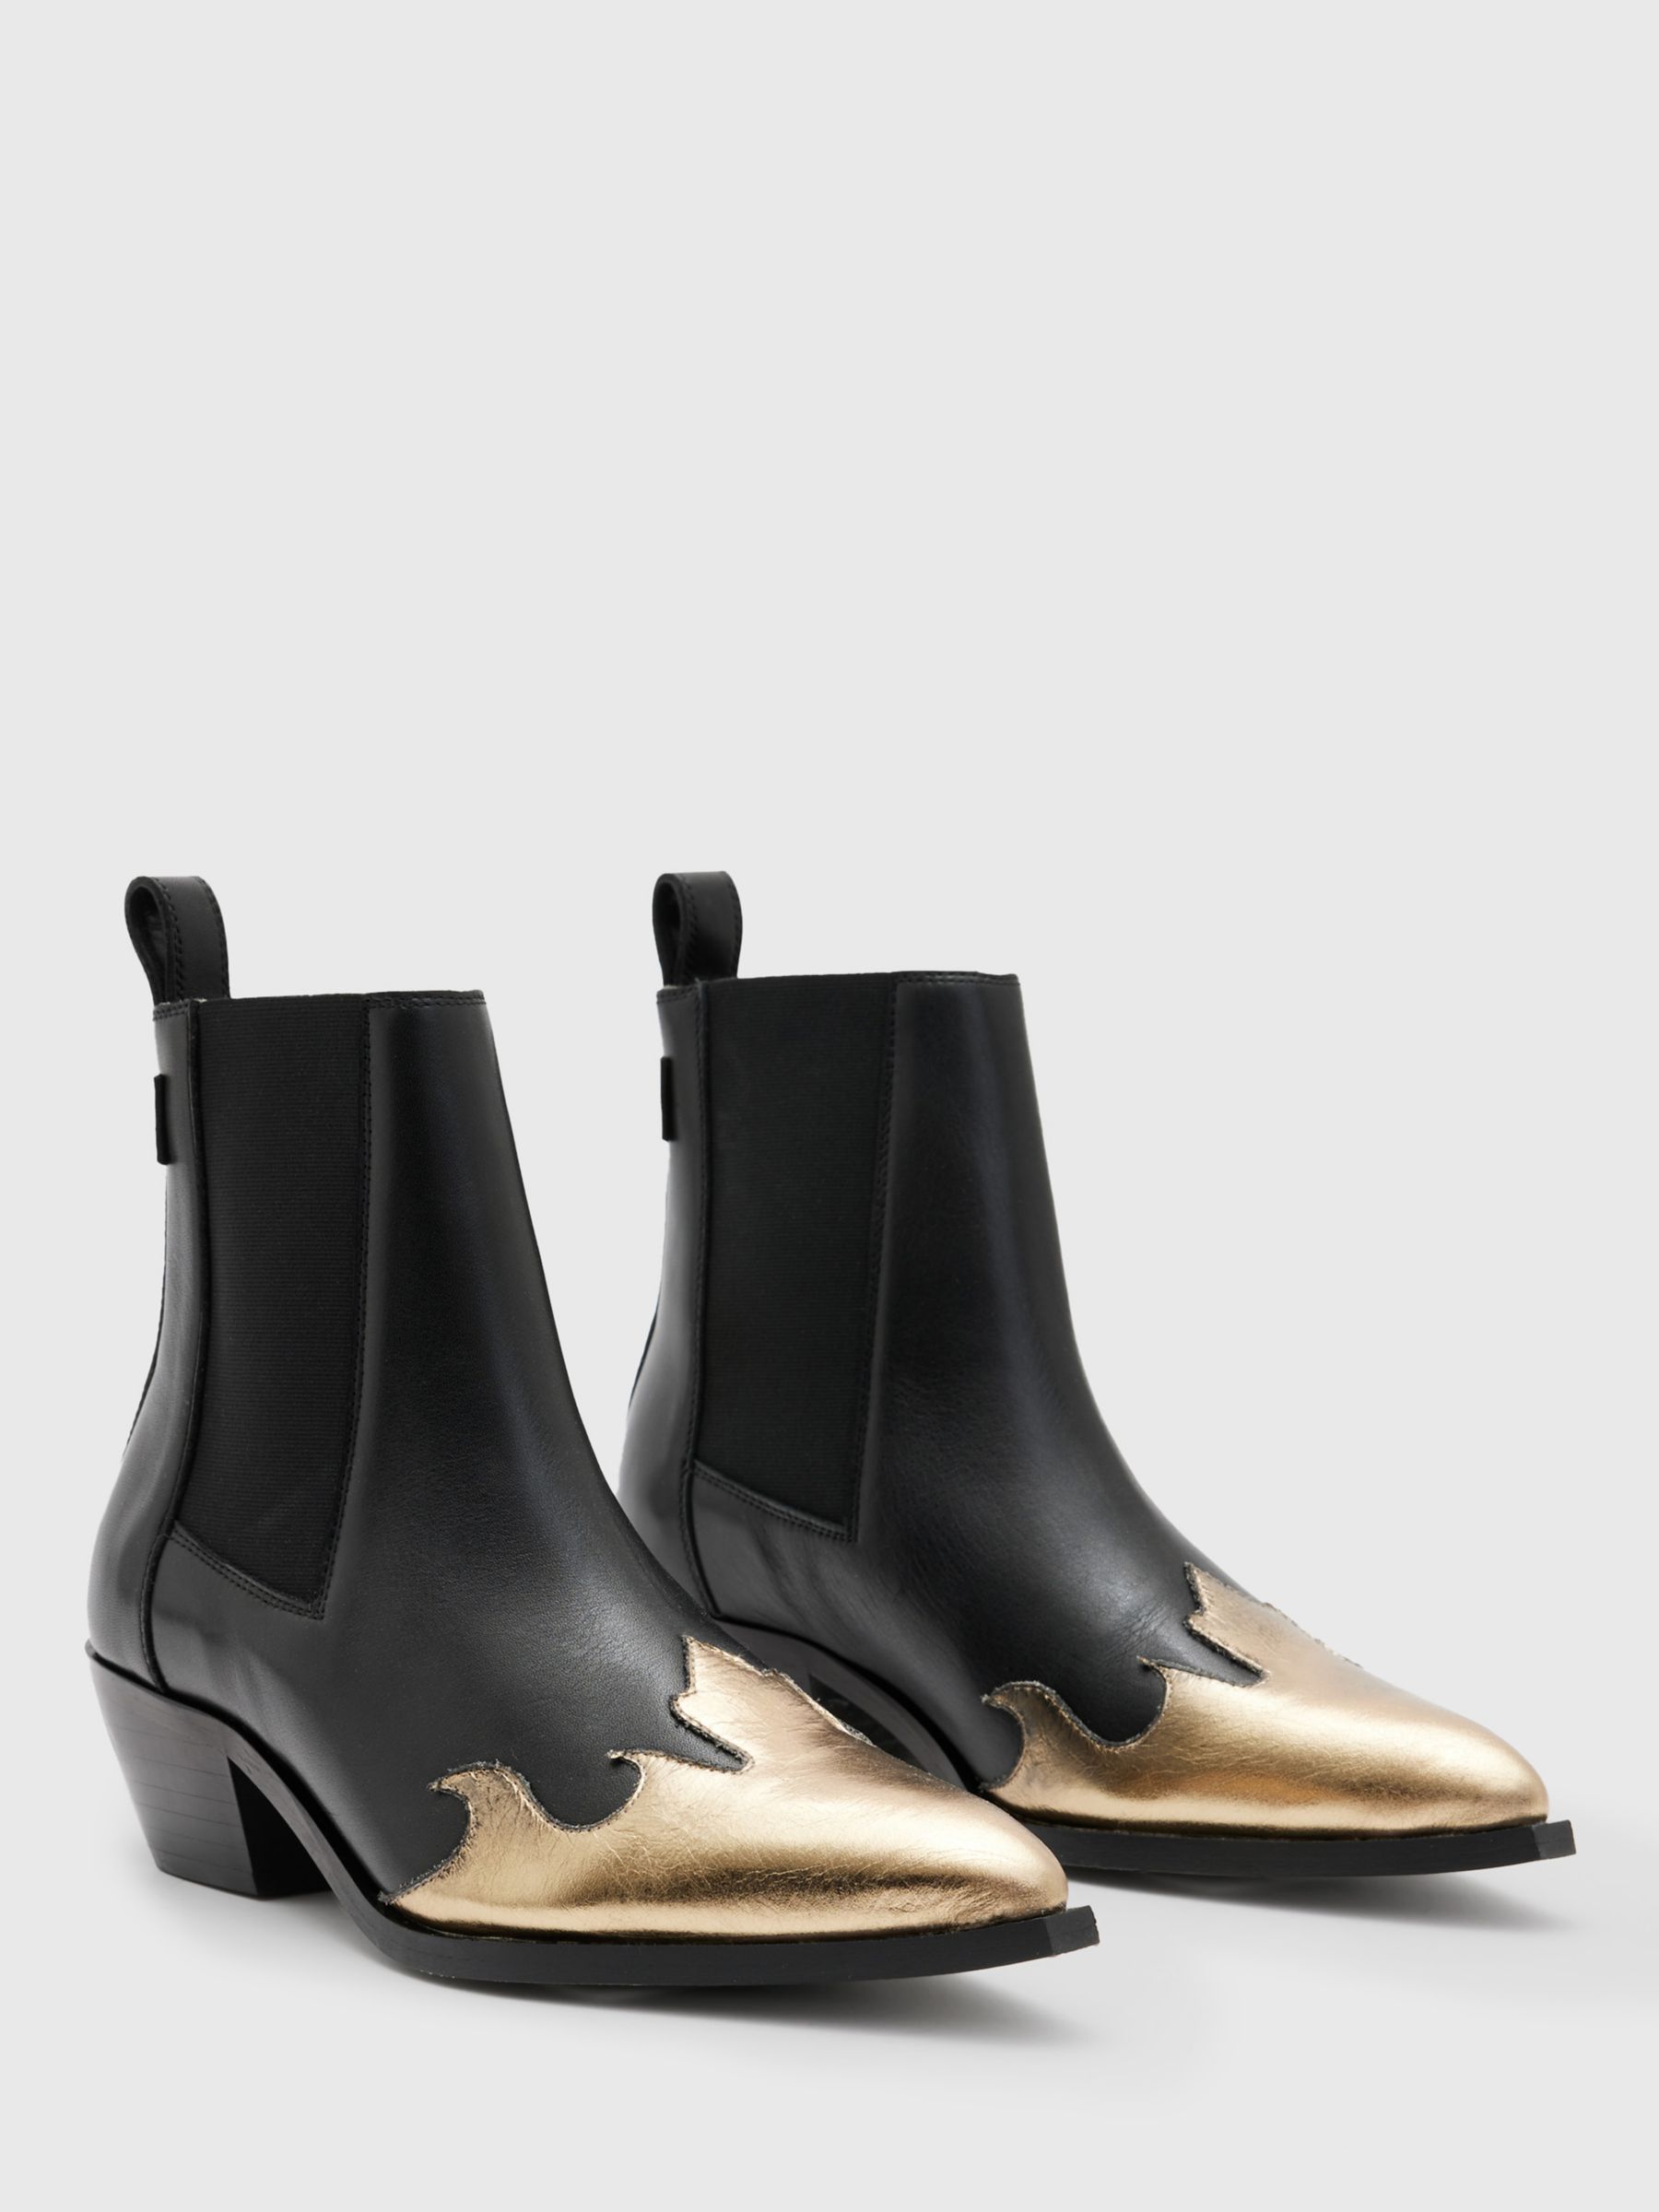 AllSaints Dellaware Leather Boots, Black/Gold, 6